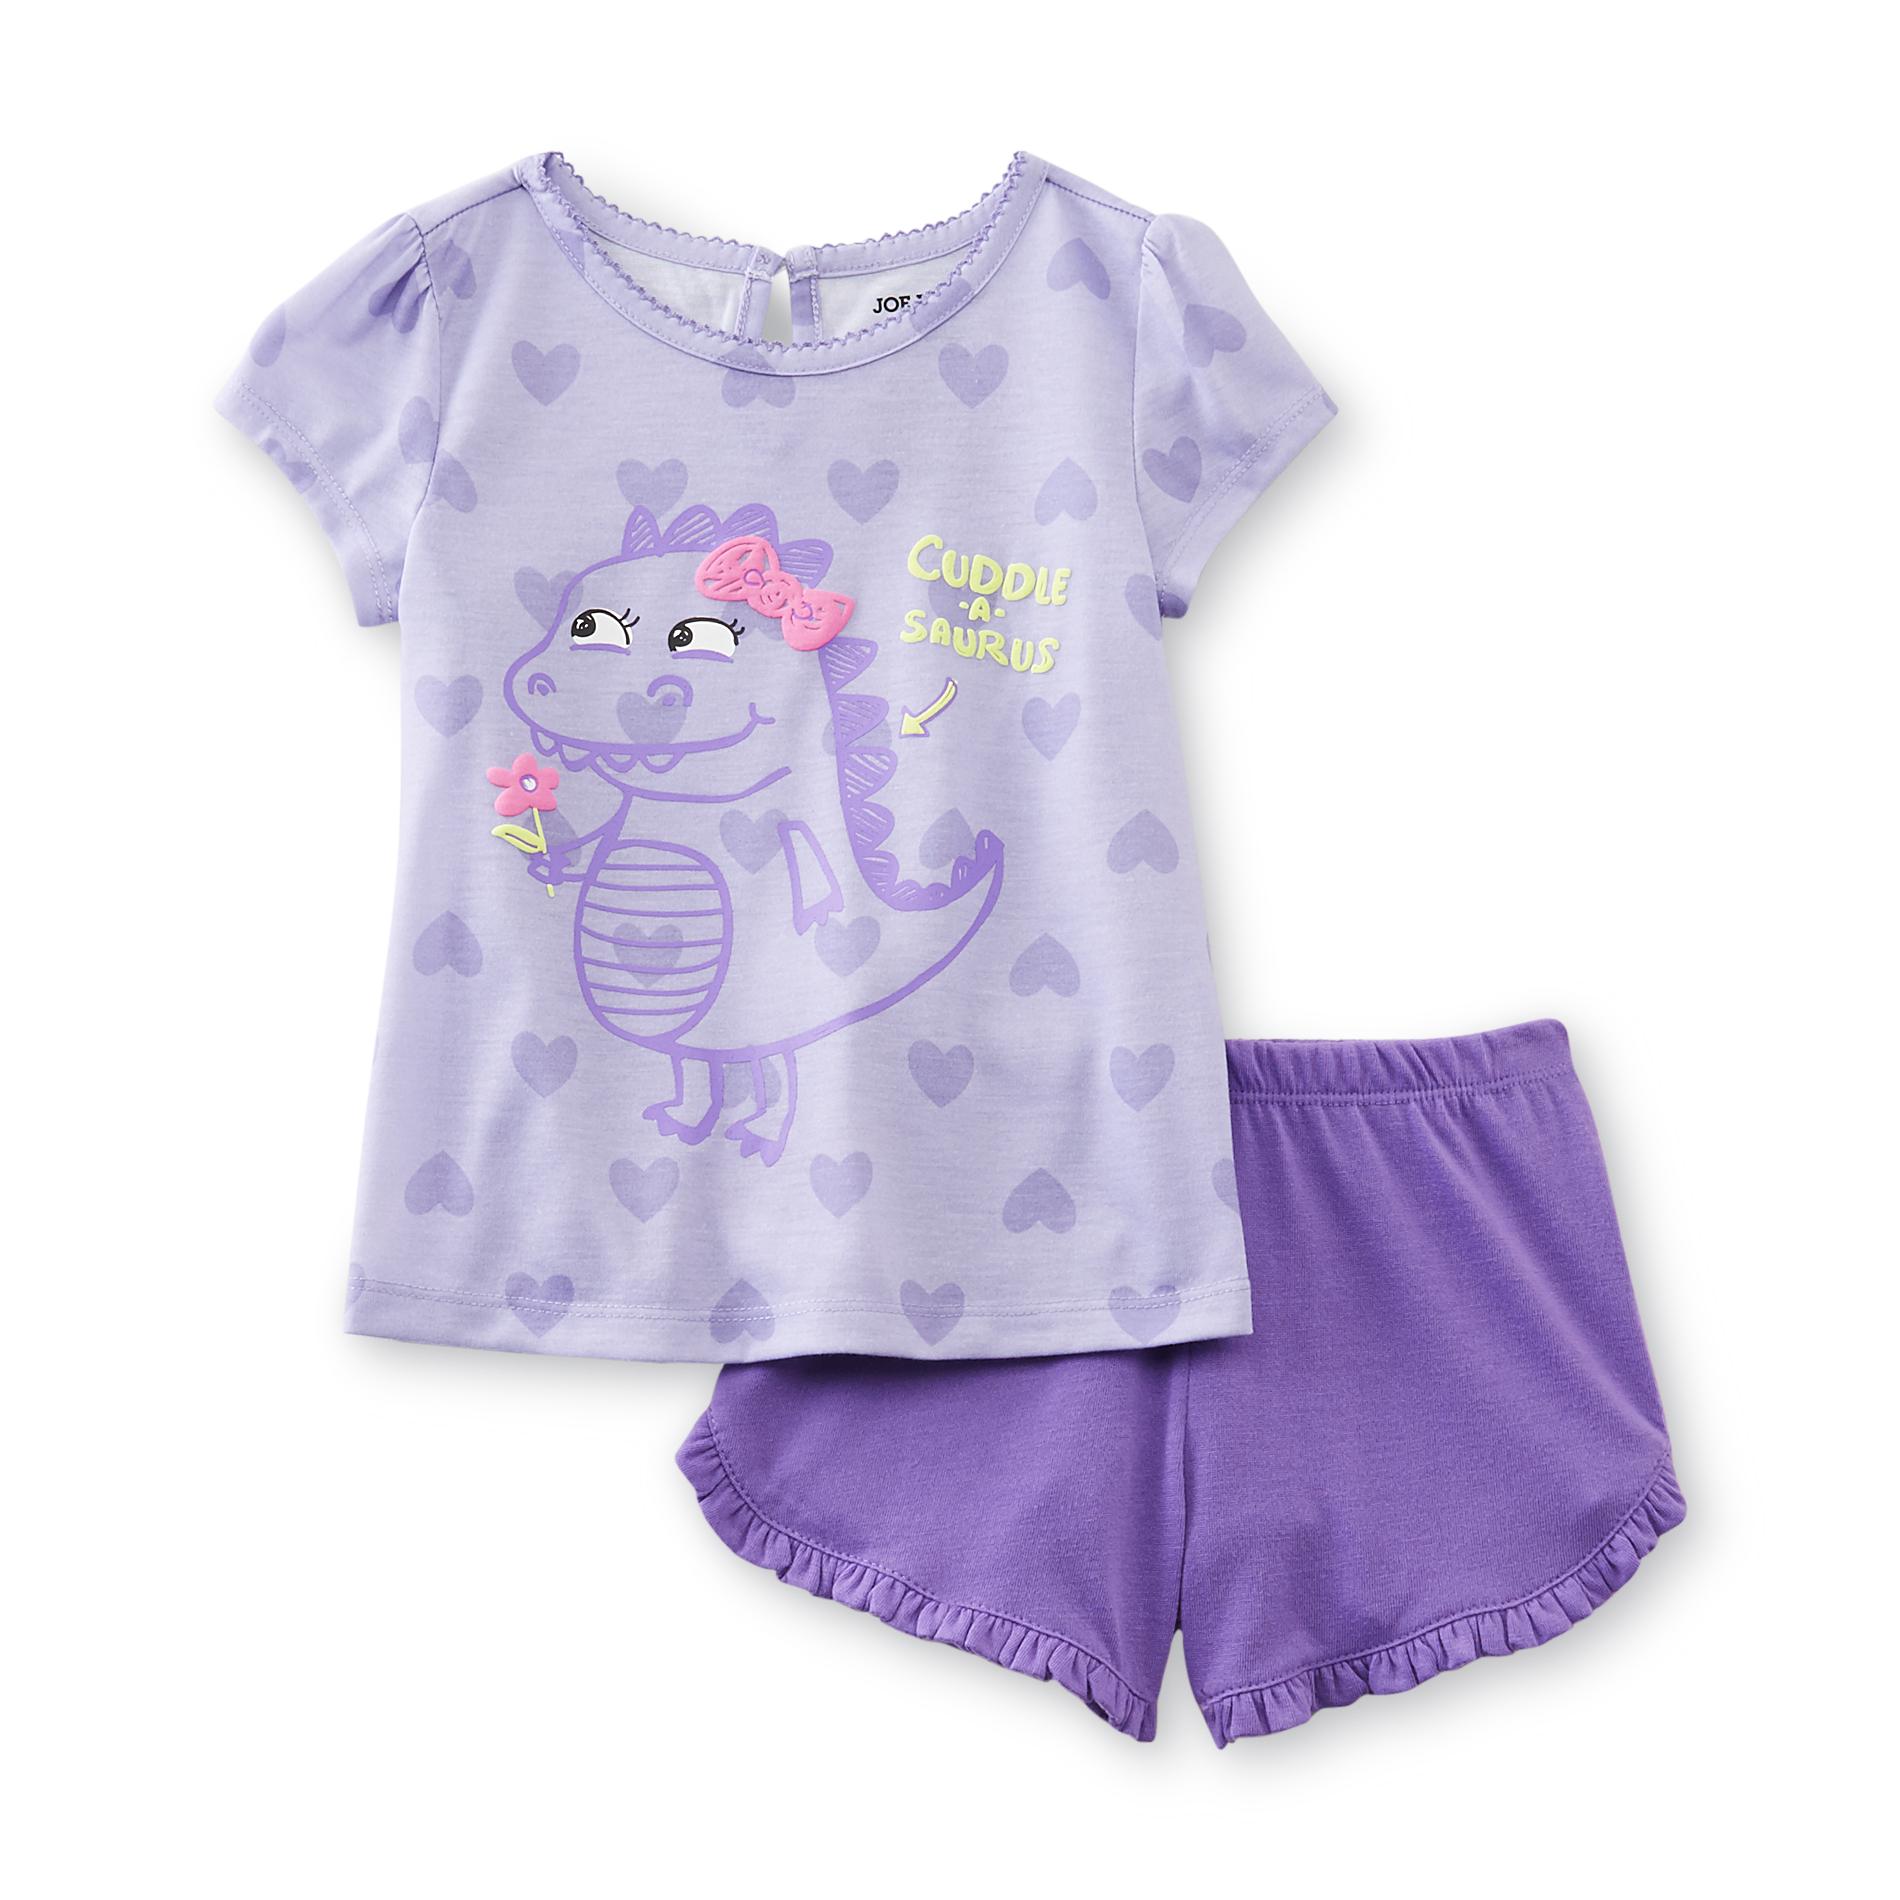 Joe Boxer Infant & Toddler Girl's Pajama Top & Shorts - Dinosaur